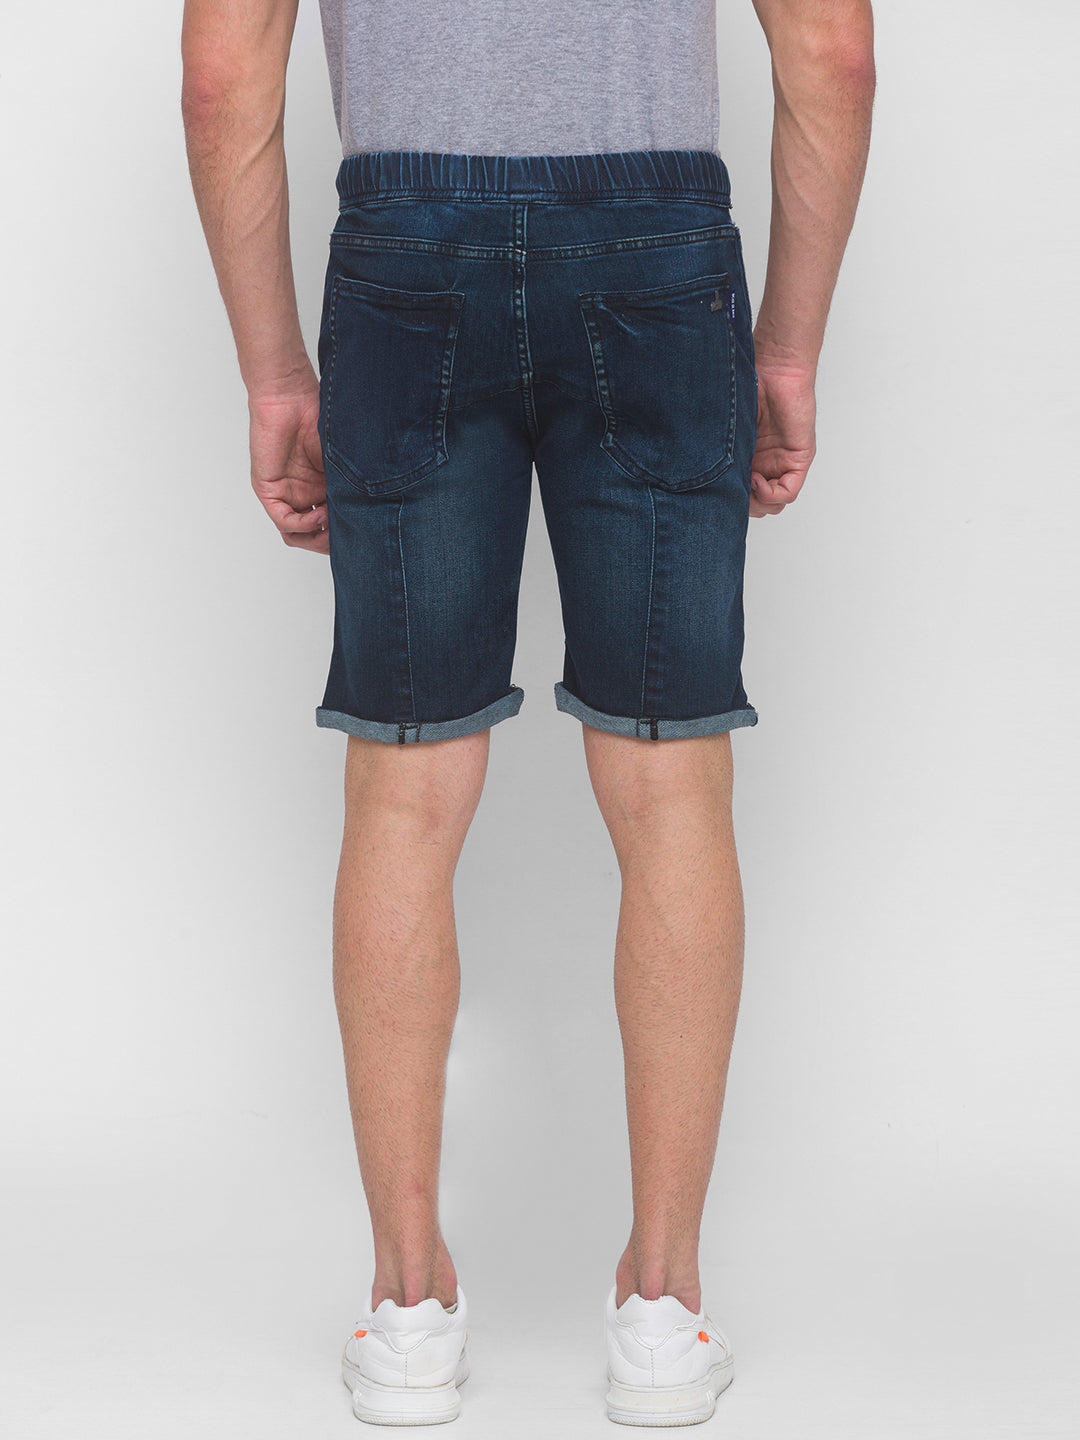 Navy Blue Denim Shorts